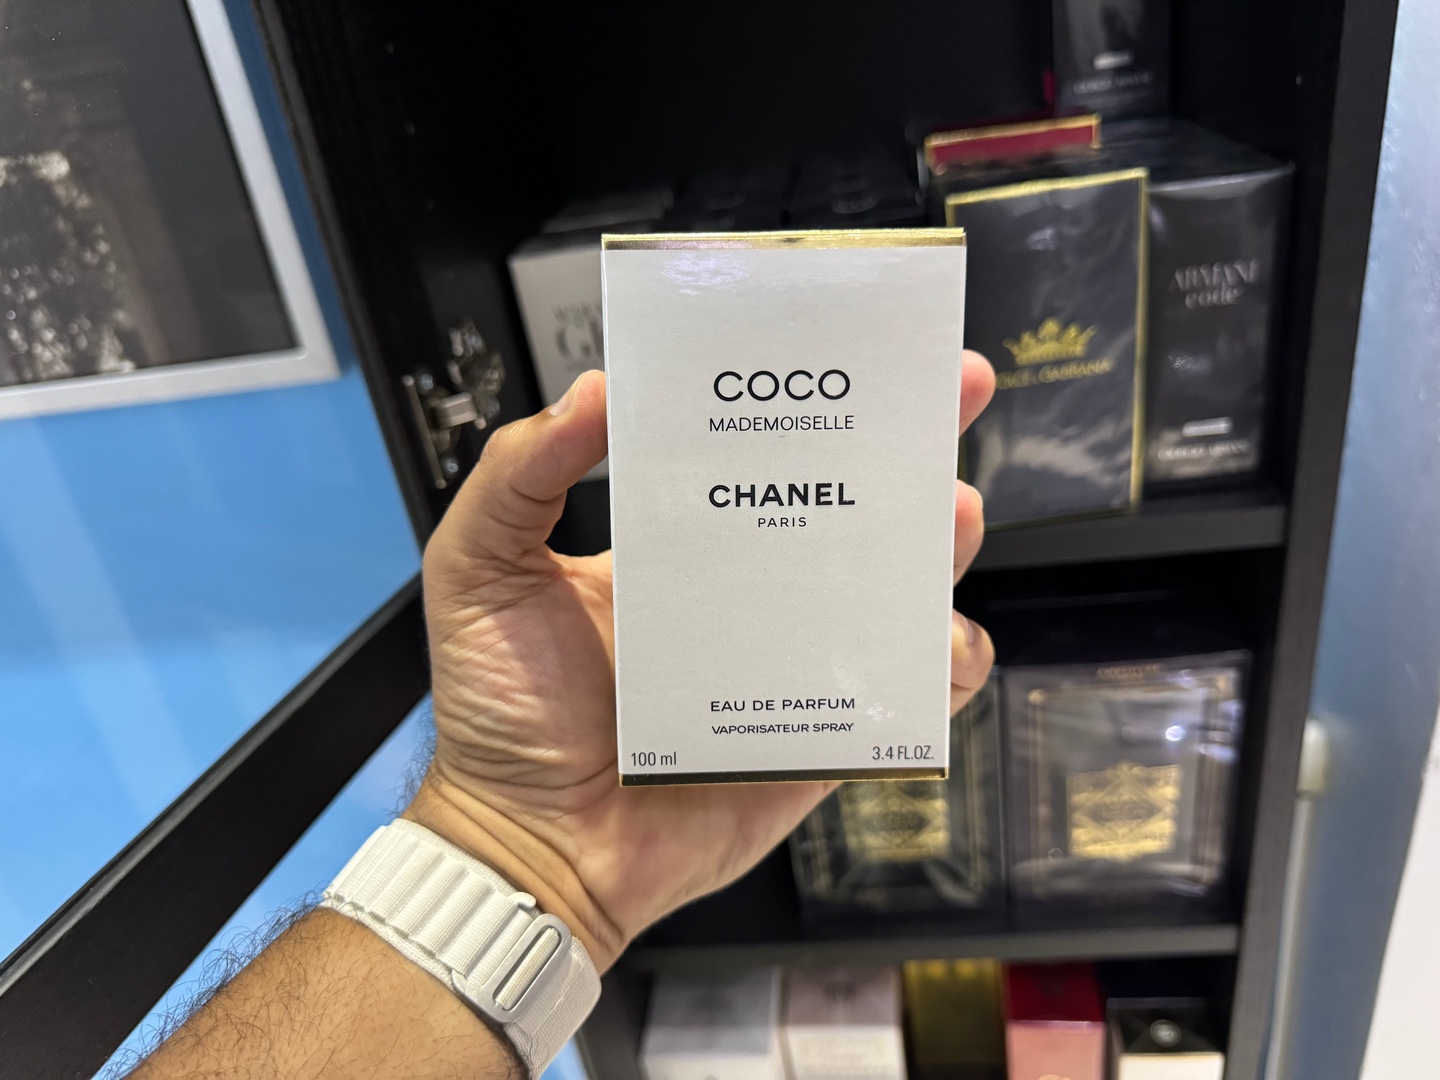 joyas, relojes y accesorios - Perfume Coco Mademoiselle Chanel Paris EDP 100ml, Nuevo, Original, RD$ 9,300 NEG 0